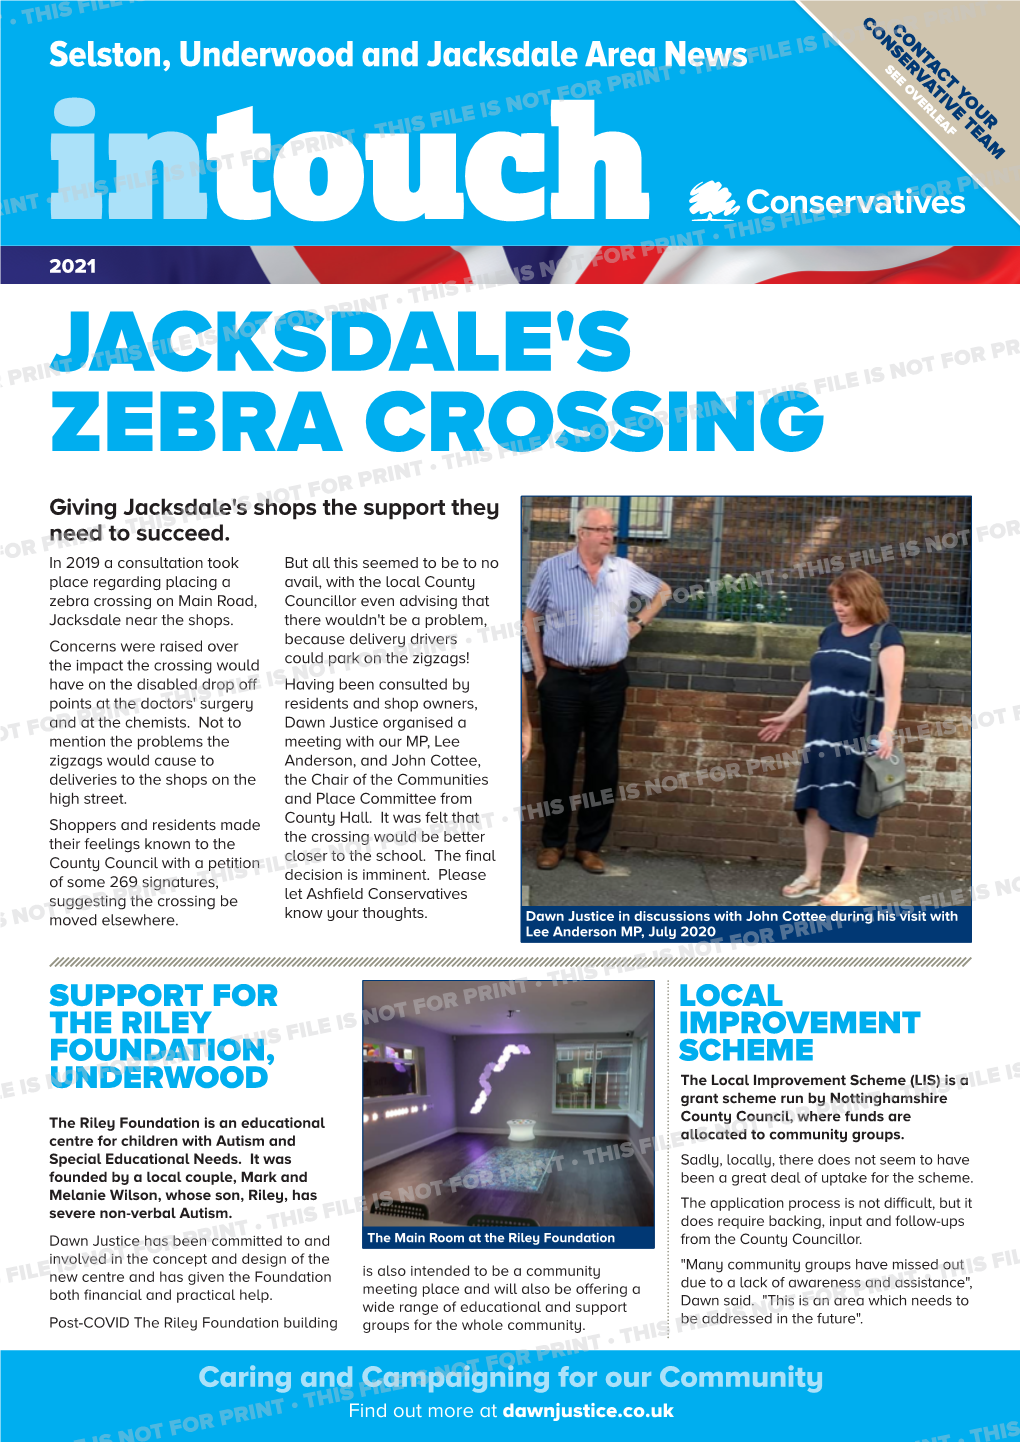 Jacksdale's Zebra Crossing